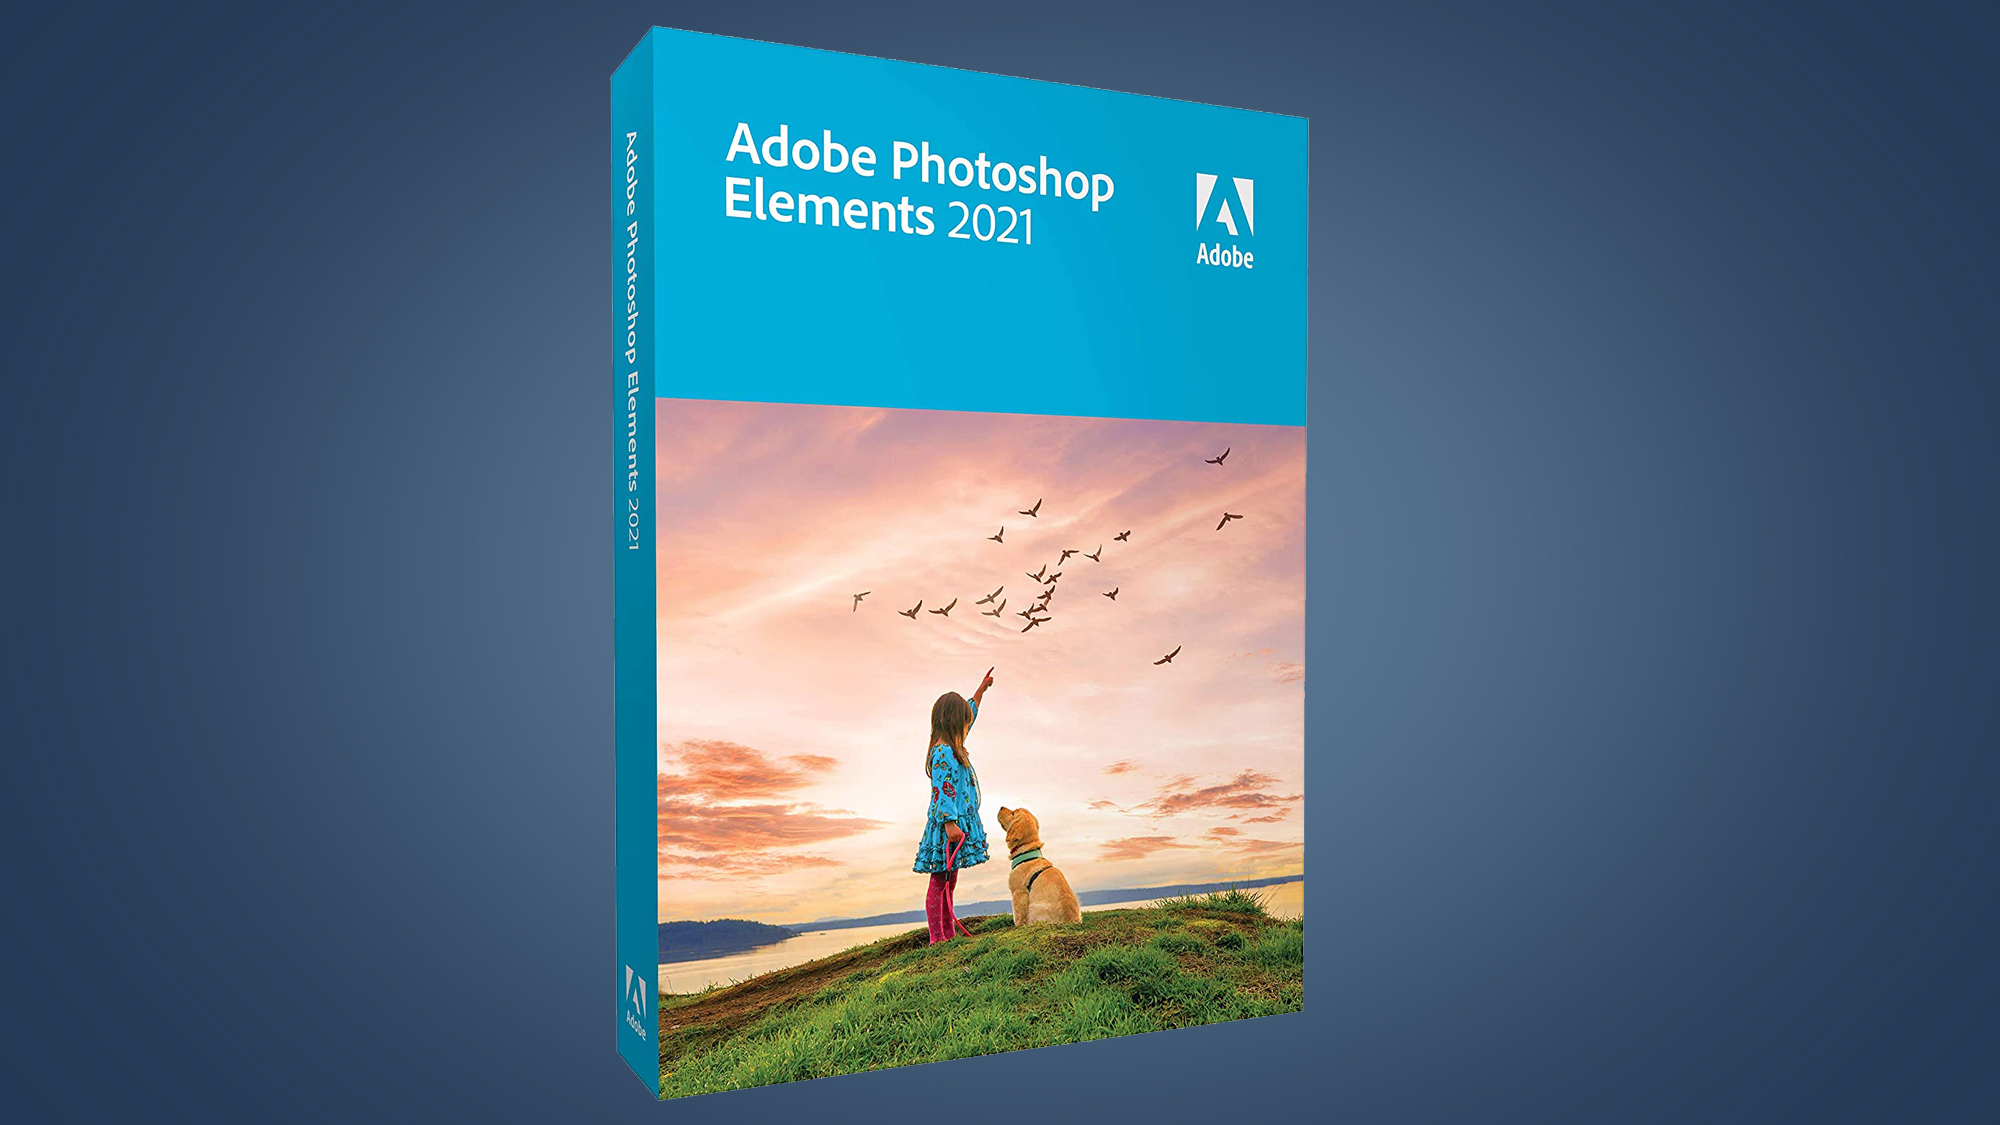 Adobe PhotoShop Elements 2021